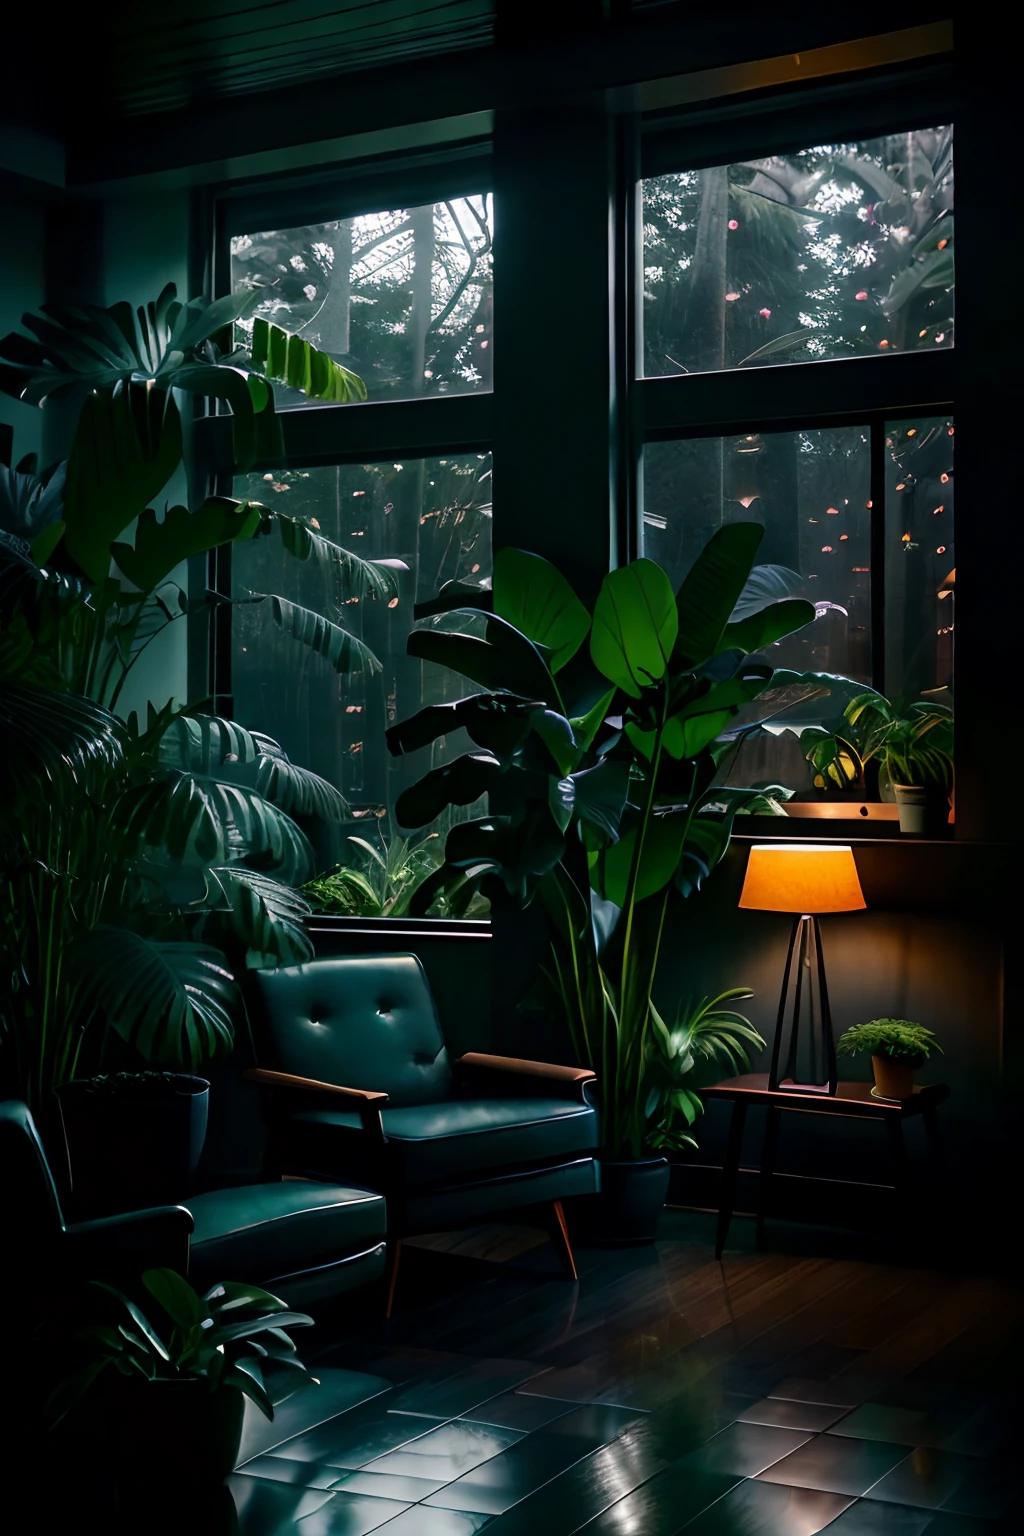 midcentury modern living room dimly lit with dark ฝนตก evening outside, (foggy ฝนตก evening:1.2), แปซิฟิกตะวันตกเฉียงเหนือ, (แสงสลัว:1.4), (แสงอารมณ์:1.2), พืช, large พืช, ฝนตก, สัตว์ประหลาด, many พืช, (หน้าต่างมีหมอก:1.2), ผลงานชิ้นเอก, คุณภาพดีที่สุด, ชั่วโมงพลบค่ำ, (ตอนกลางคืน:1.4), ฝนตก evening, หลังพระอาทิตย์ตก, ฟ้ามืด, คืนที่มืดมิด, ธีมสีเข้ม,